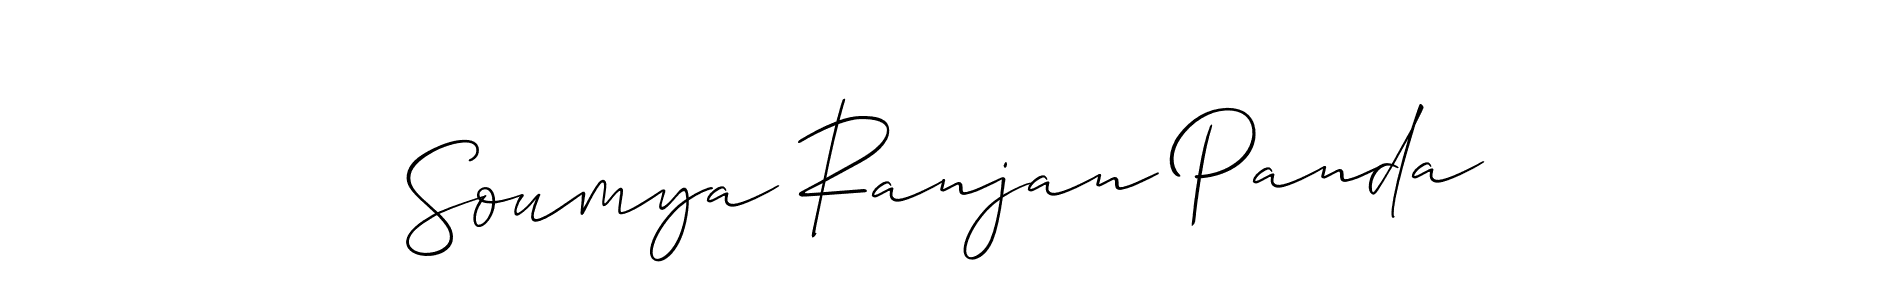 How to Draw Soumya Ranjan Panda signature style? Allison_Script is a latest design signature styles for name Soumya Ranjan Panda. Soumya Ranjan Panda signature style 2 images and pictures png